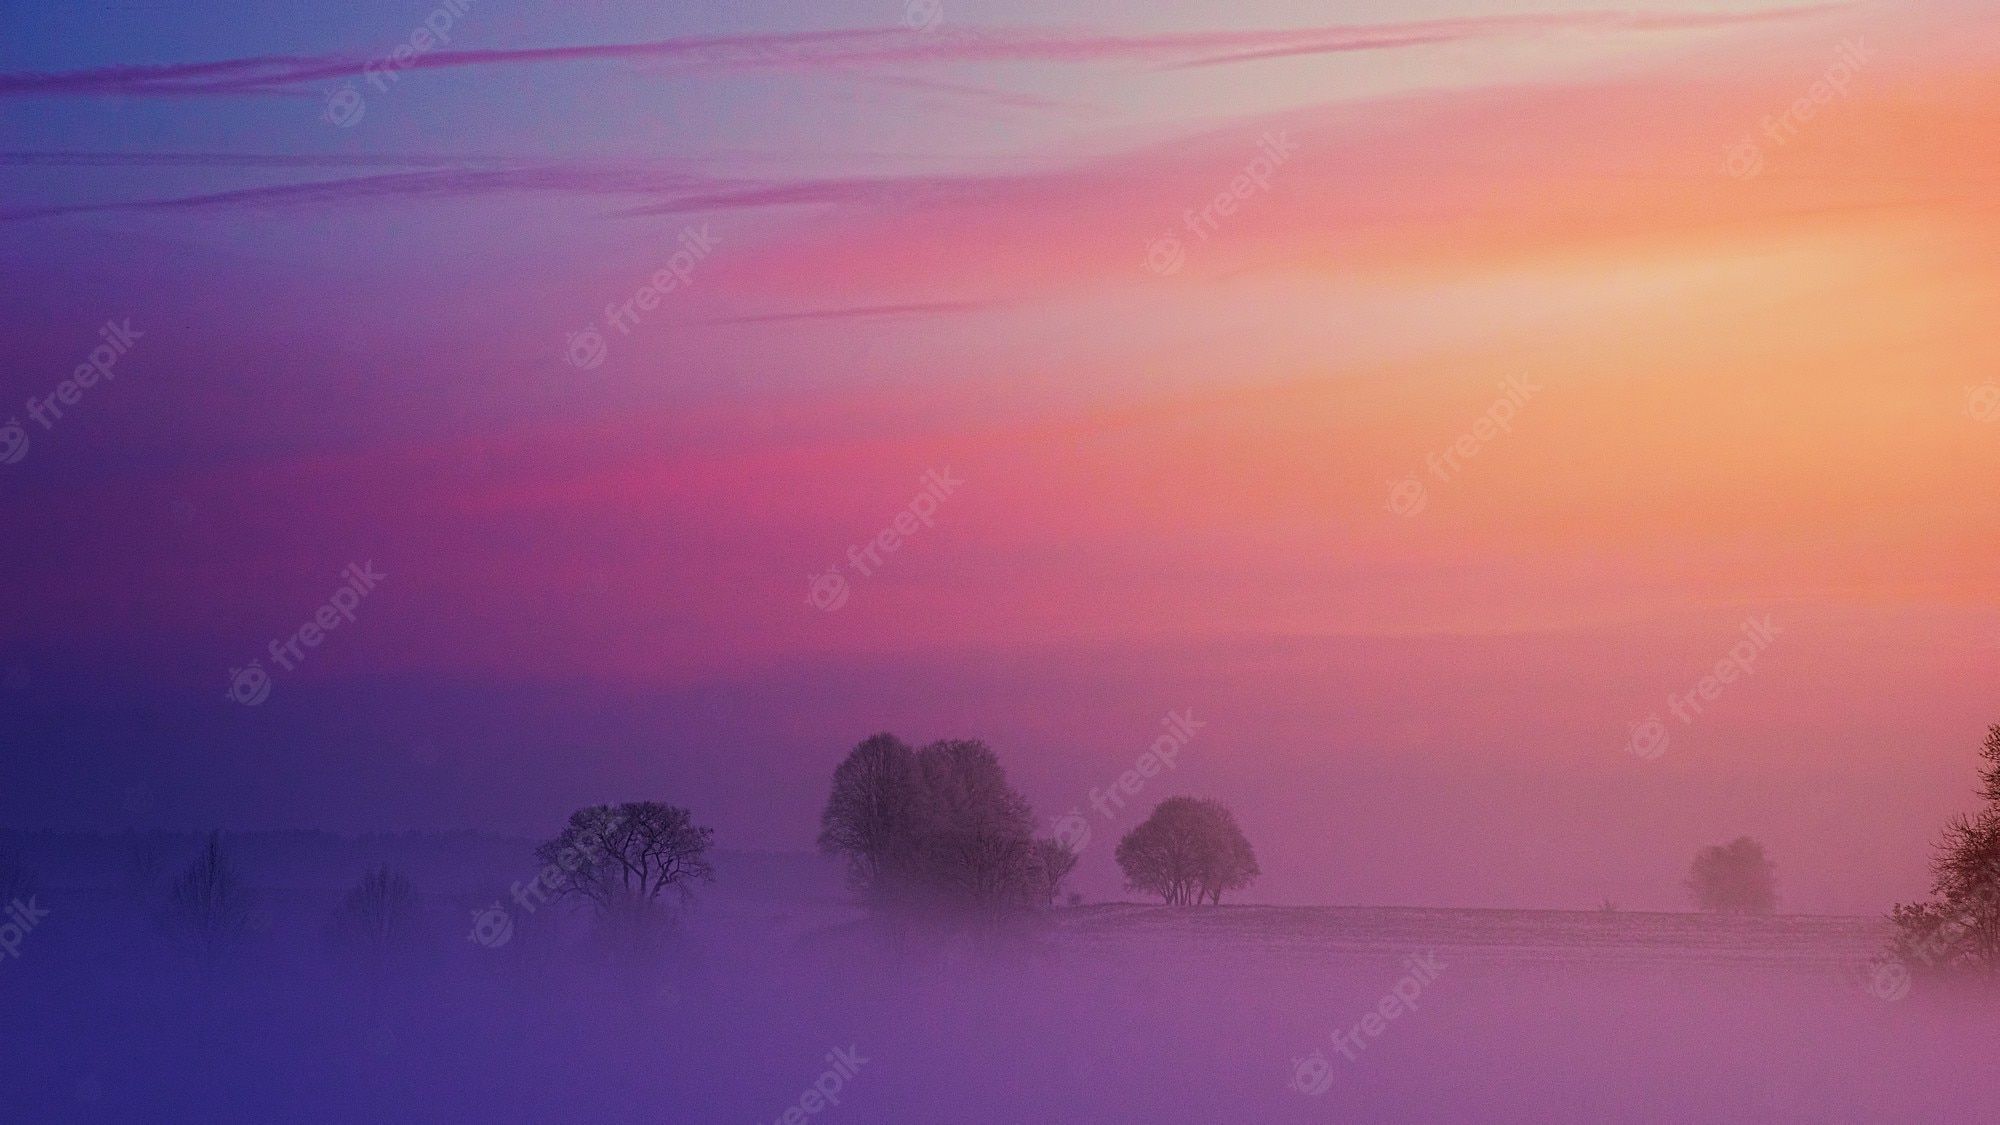 A sunset over the foggy landscape - Landscape